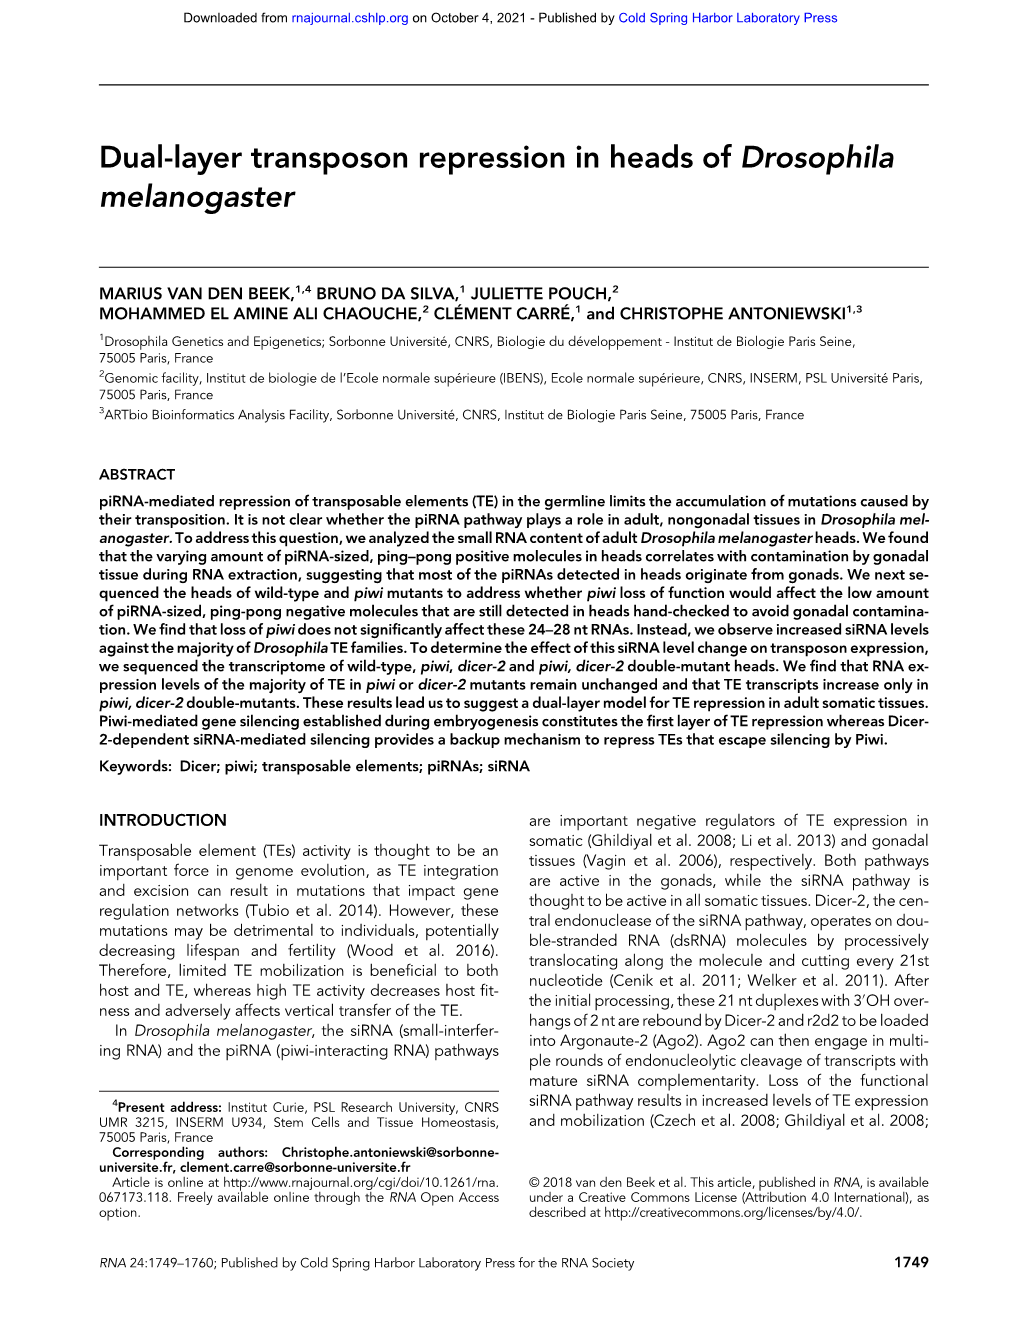 Dual-Layer Transposon Repression in Heads of Drosophila Melanogaster